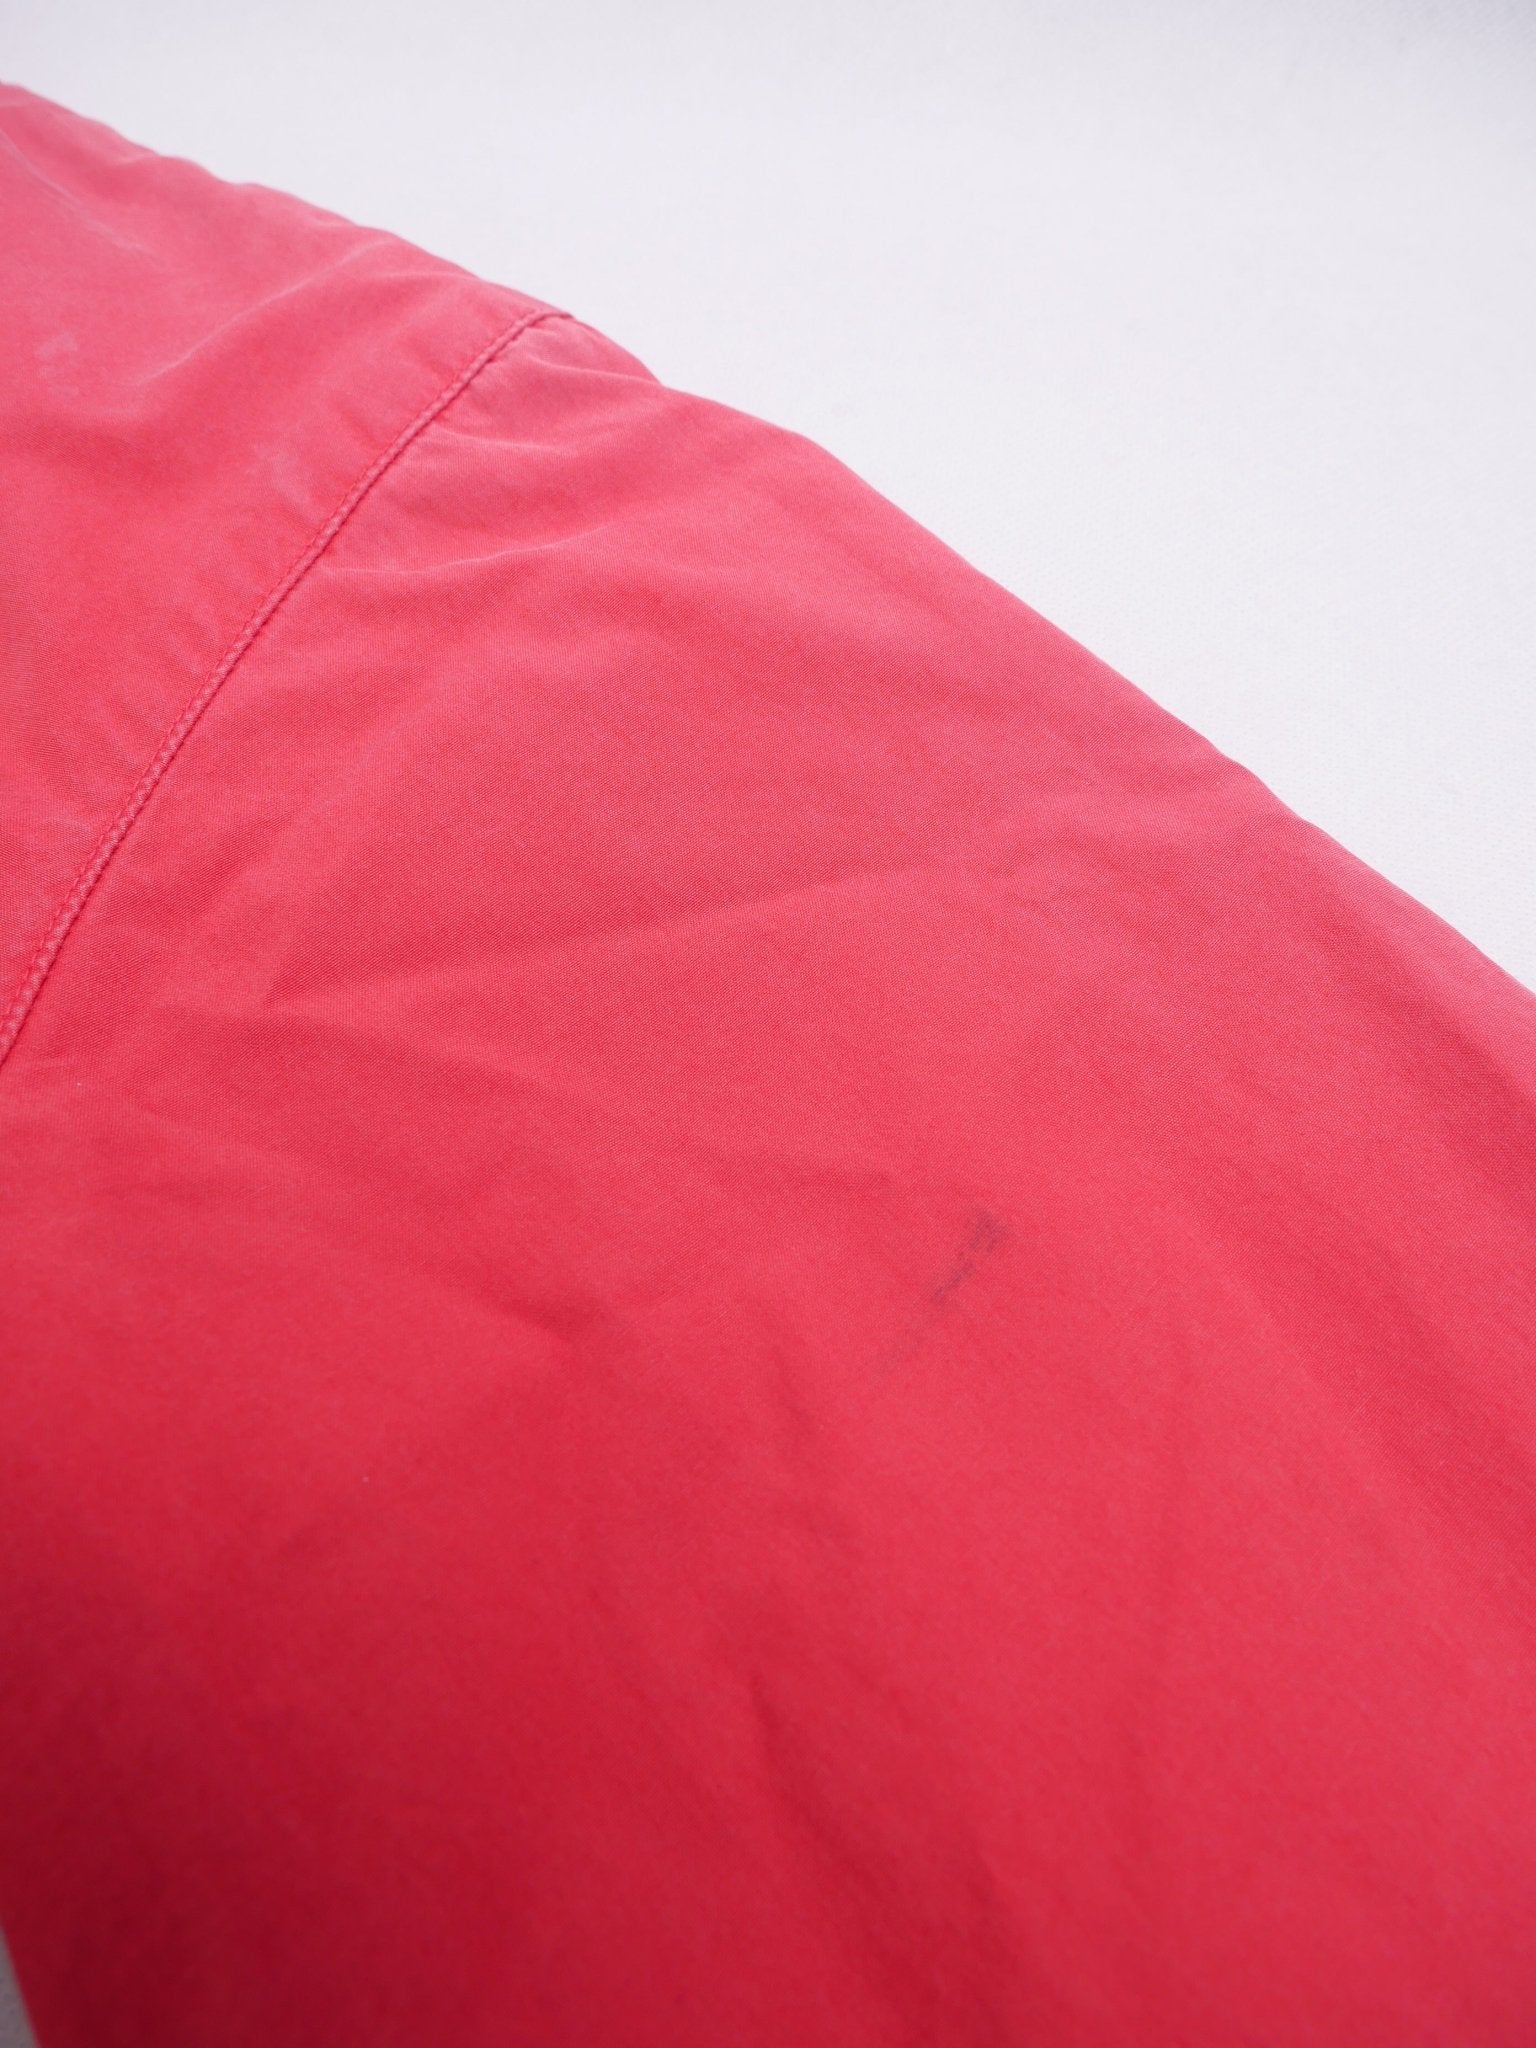 polo Ralph Lauren embroidered Logo pink Harrington Jacke - Peeces